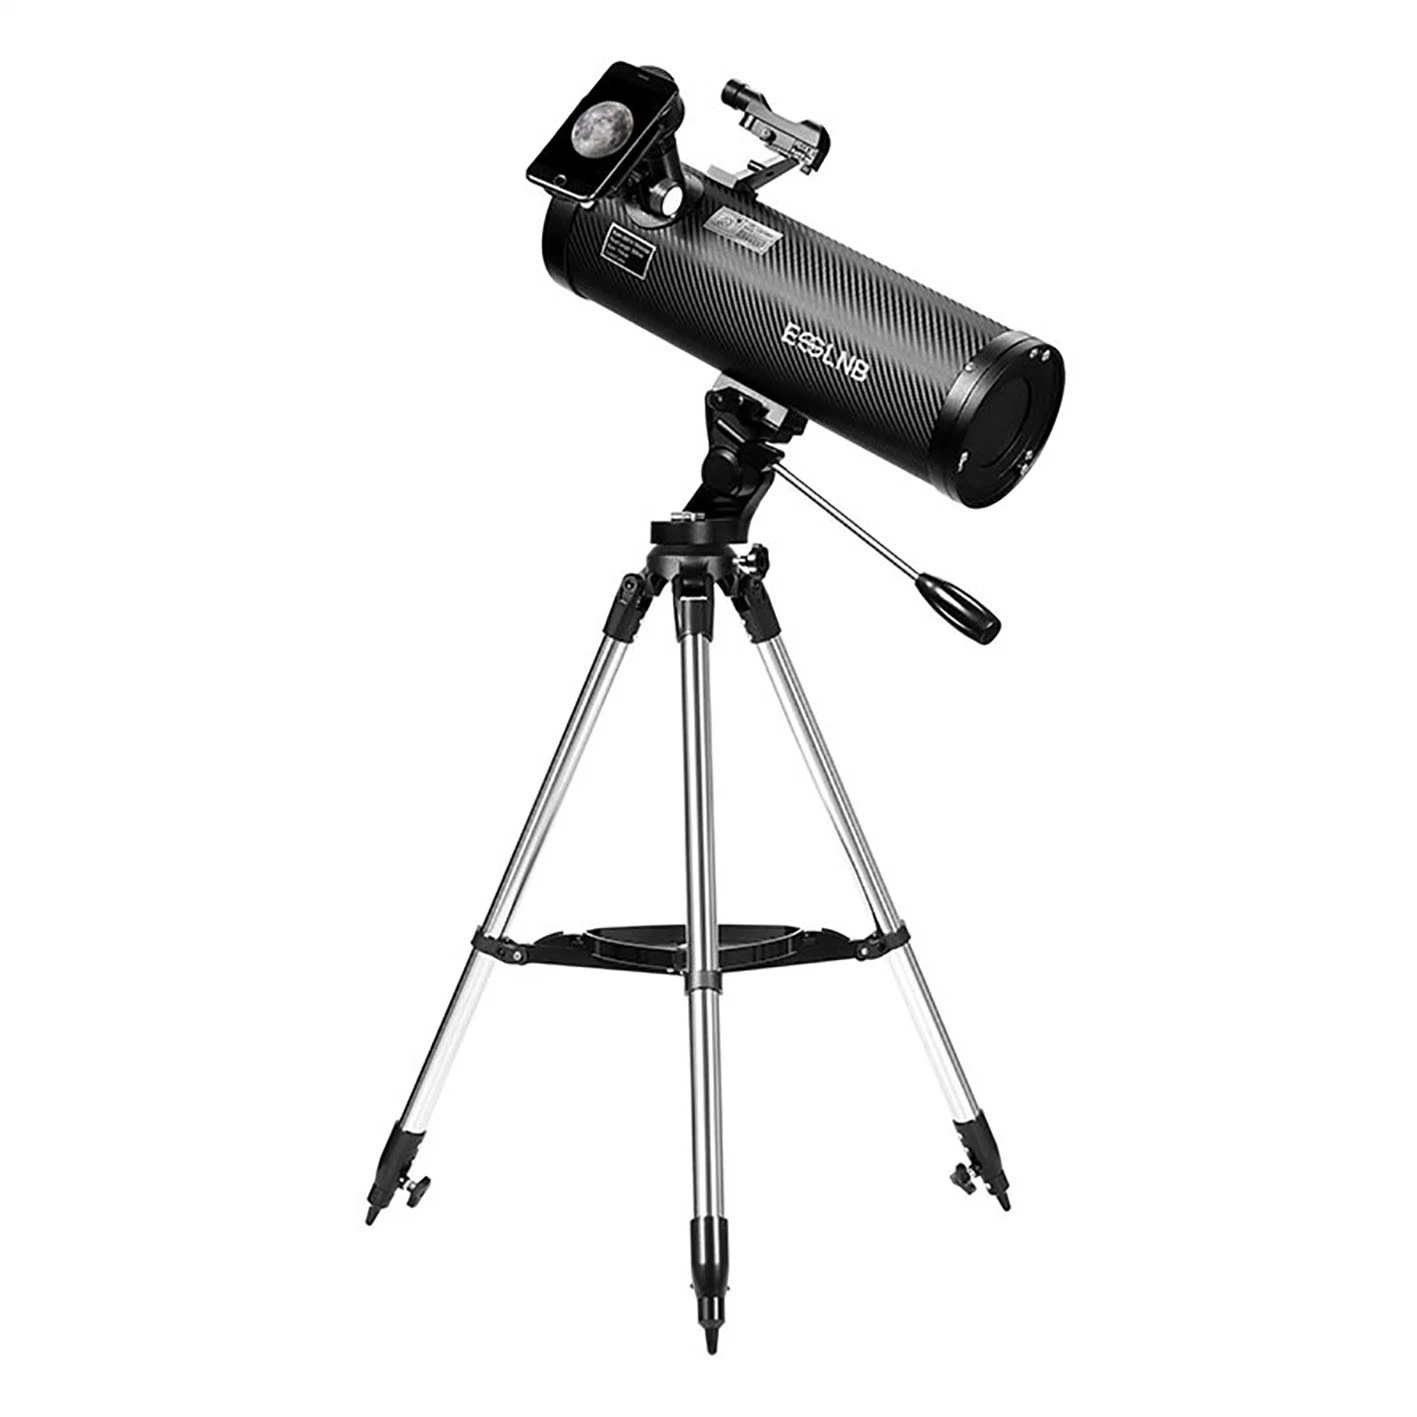 Reflector de profesionales de amplia apertura distancia focal larga alta de alta potencia telescopio astronómico